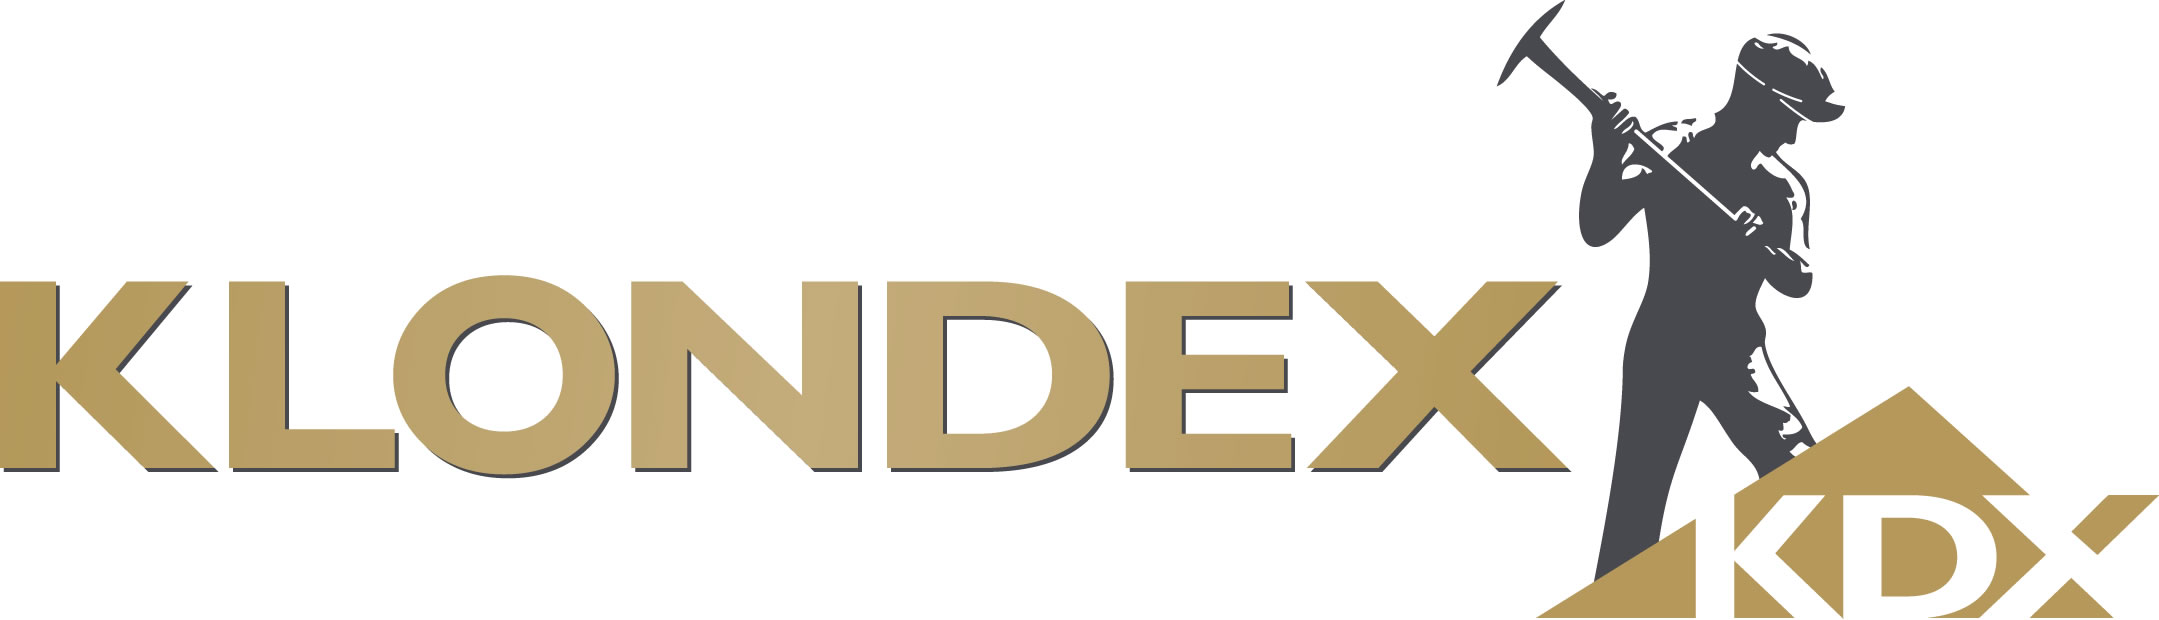 Klondex Reports Reco